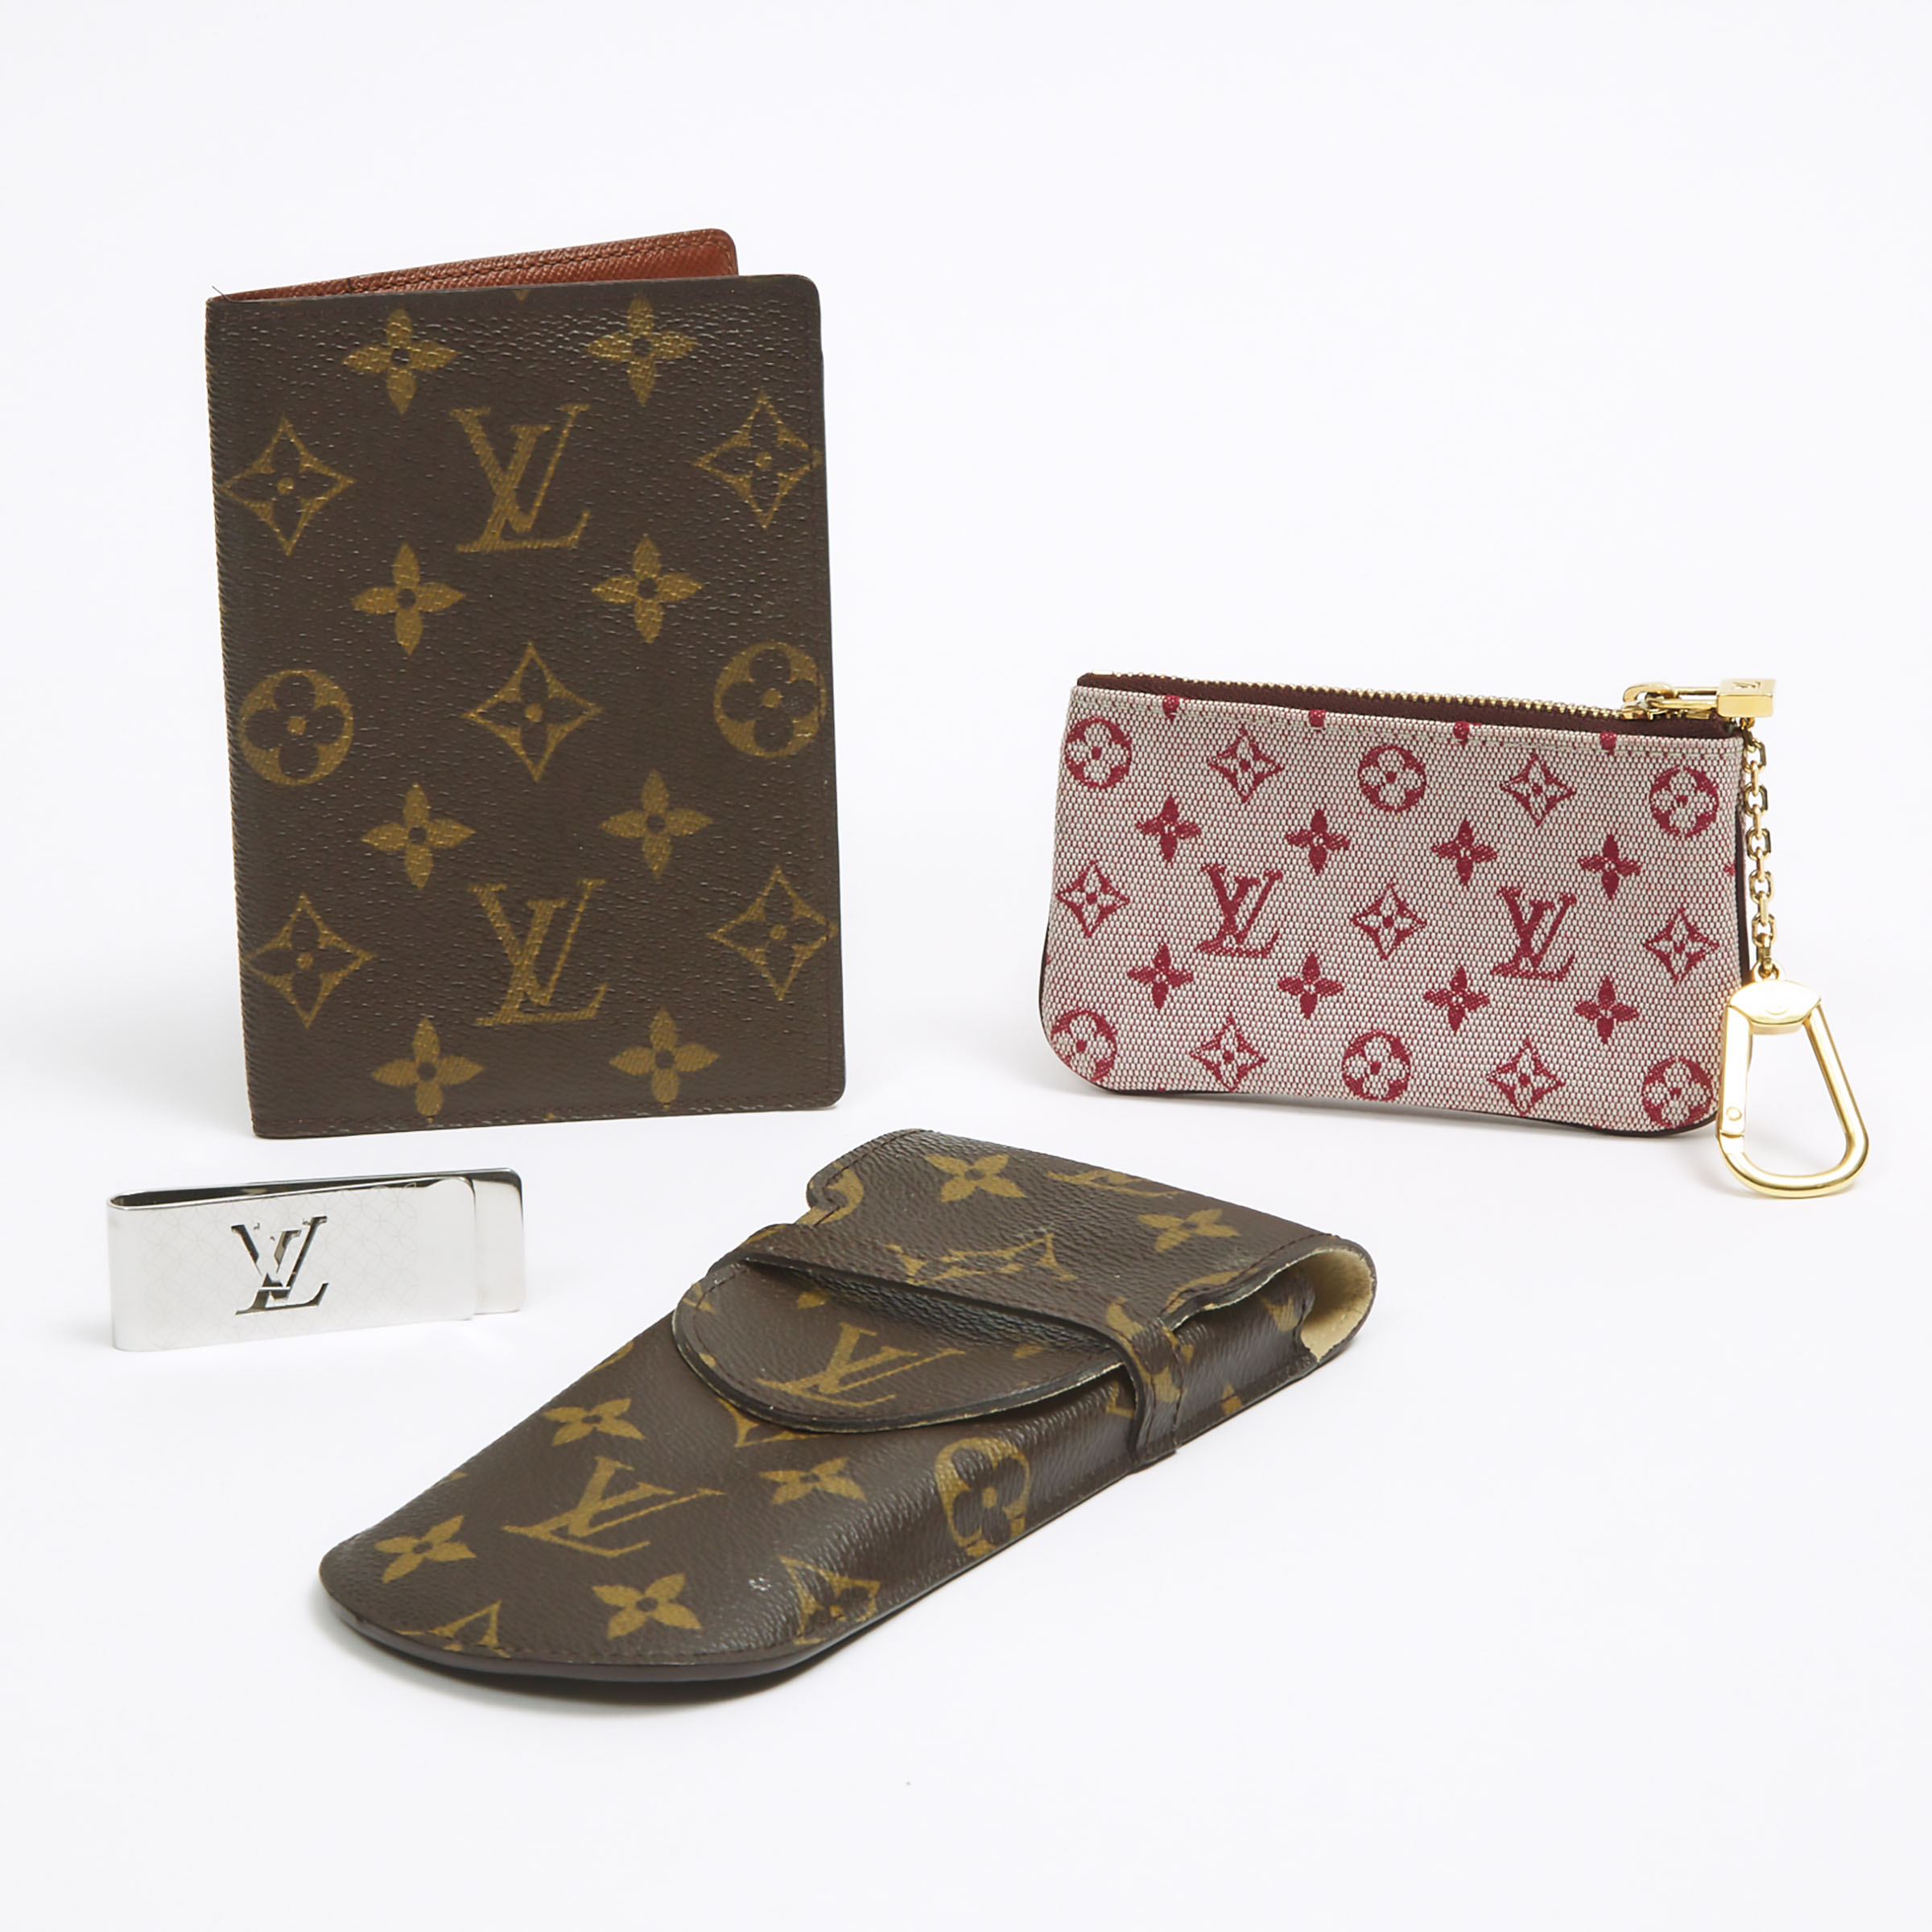 Louis Vuitton Monogram Eyeglass Case, Passport Cover, Key Pouch, And Money Clip